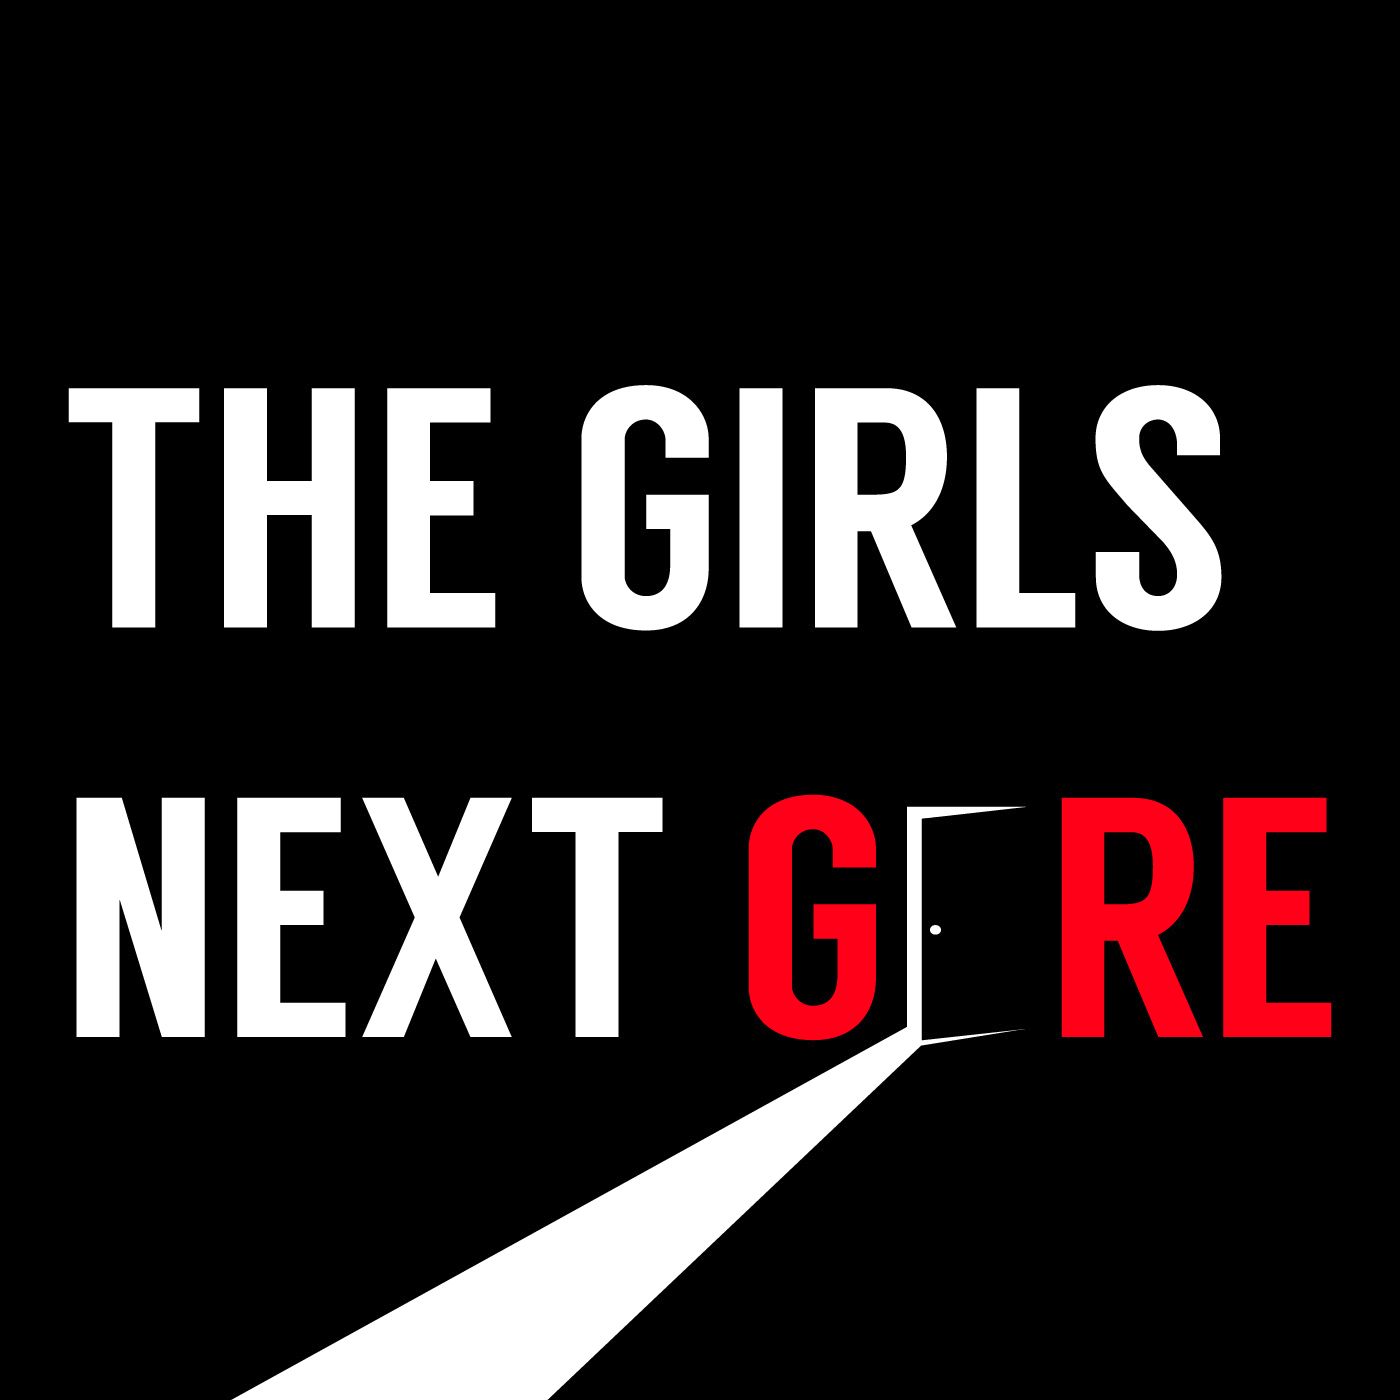 The Girls Next Gore